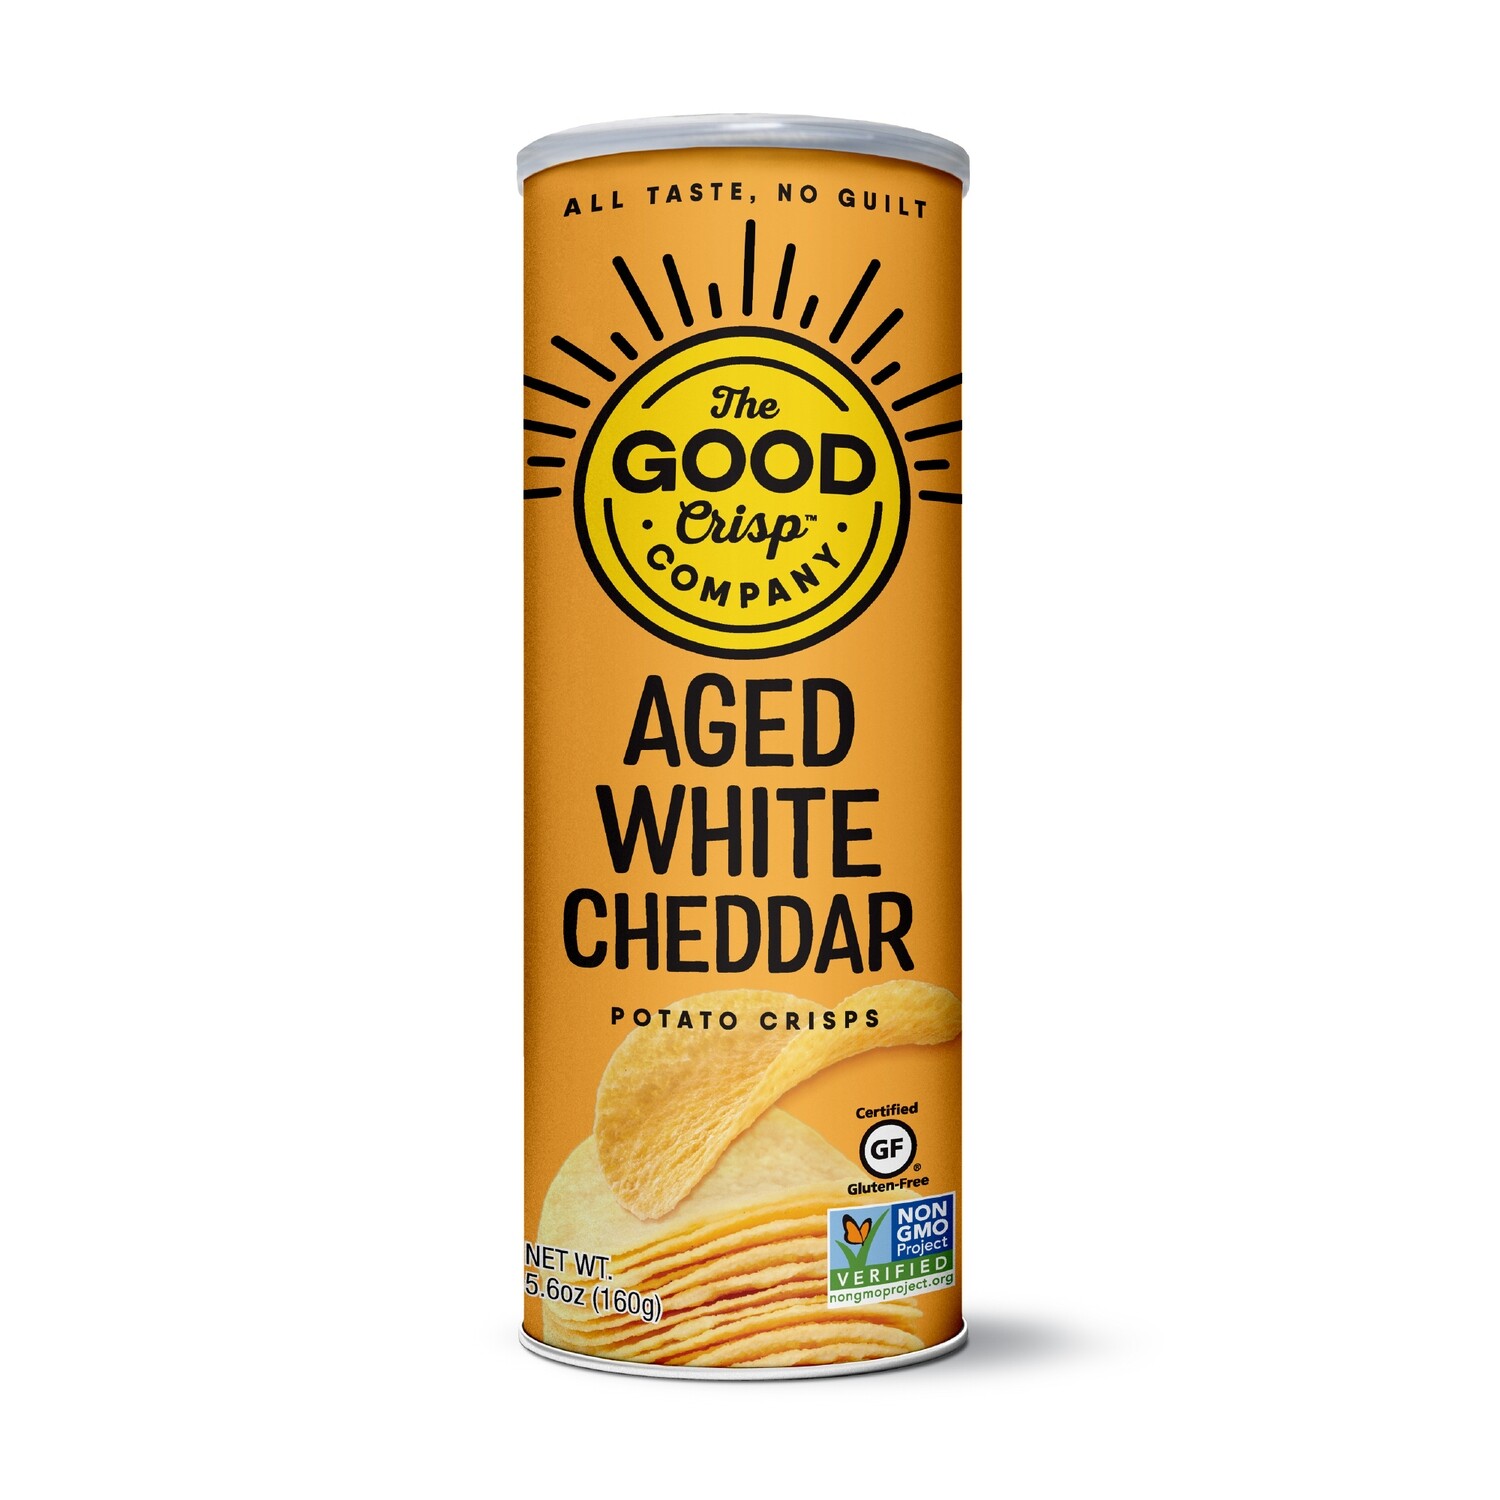 The Good Crisp Company Aged White Cheddar Potato Crisps